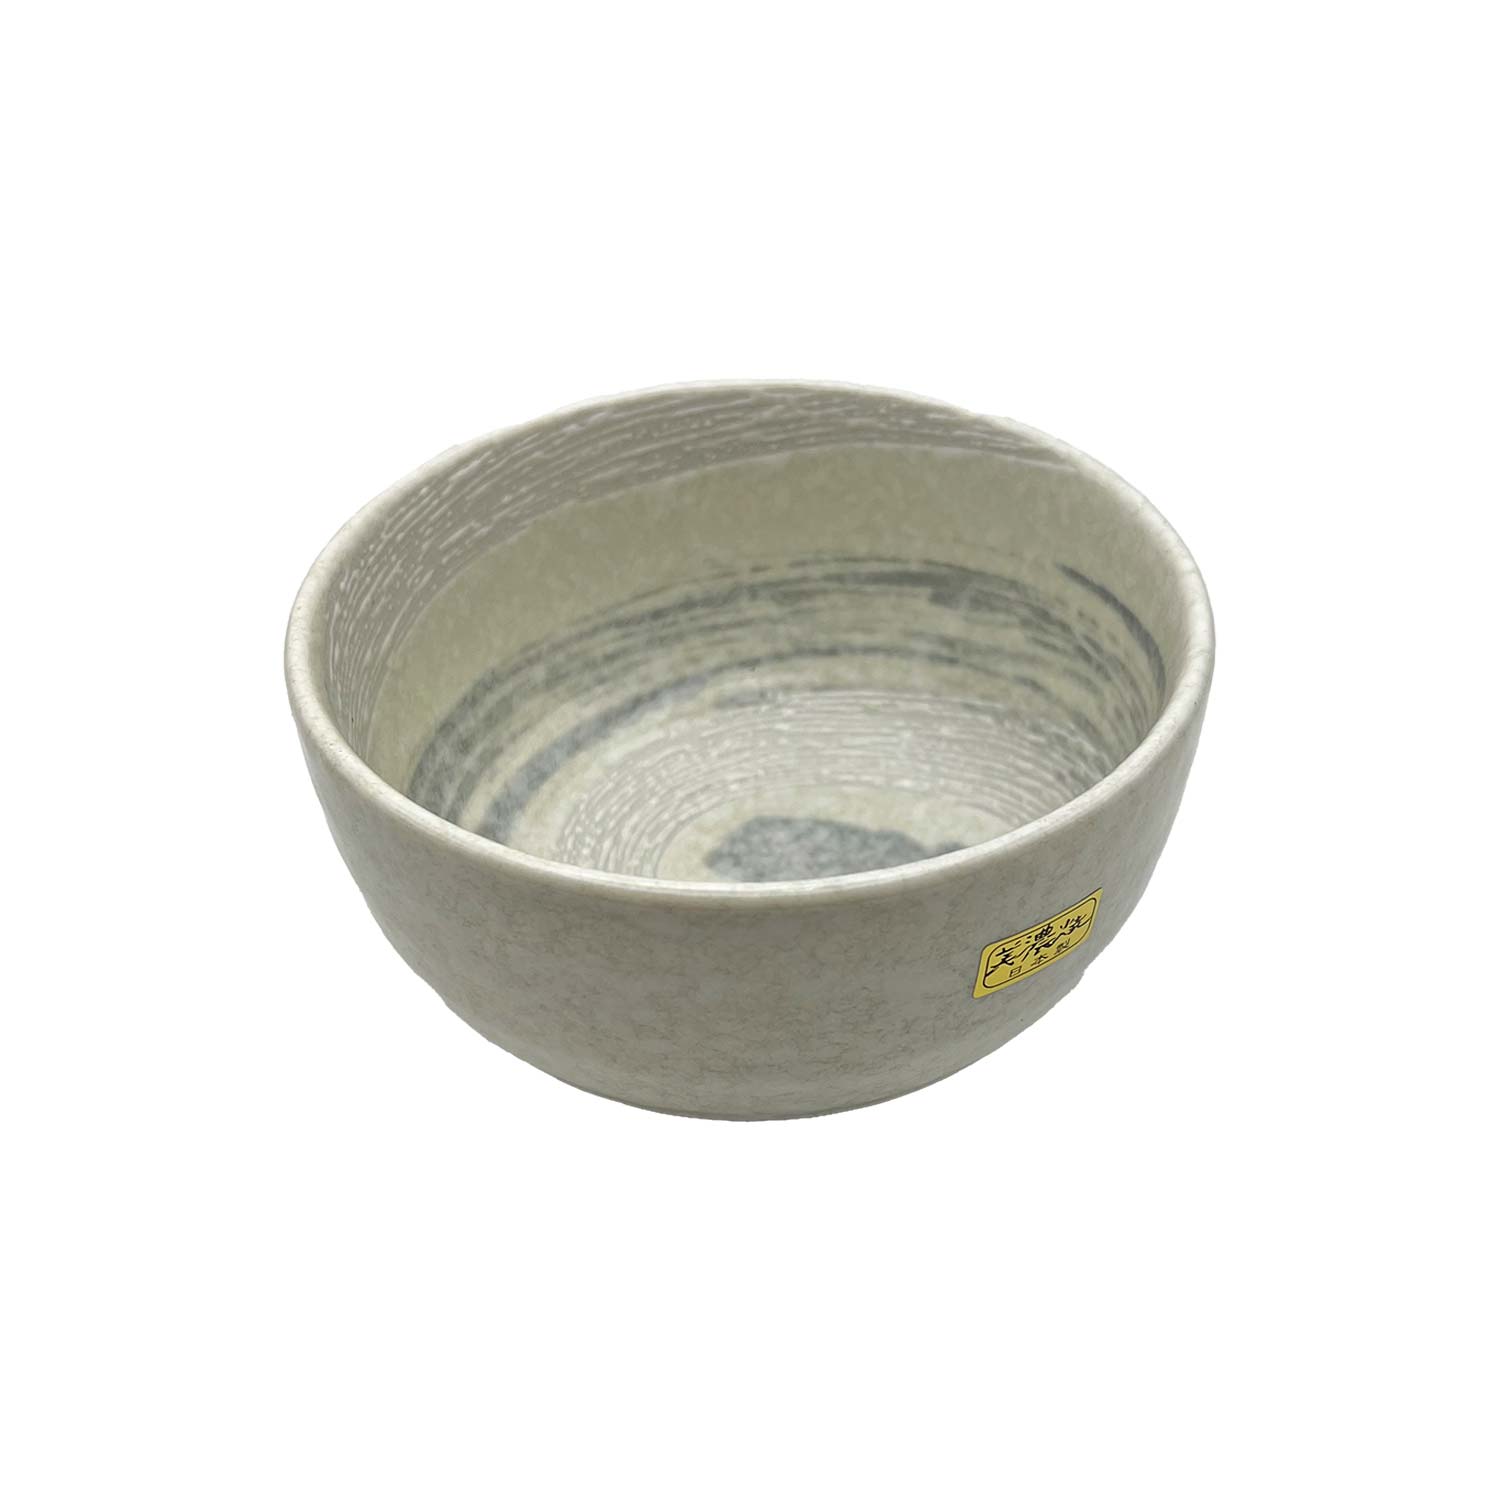 Teeschale aus Keramik grau/weiß, 400 ml